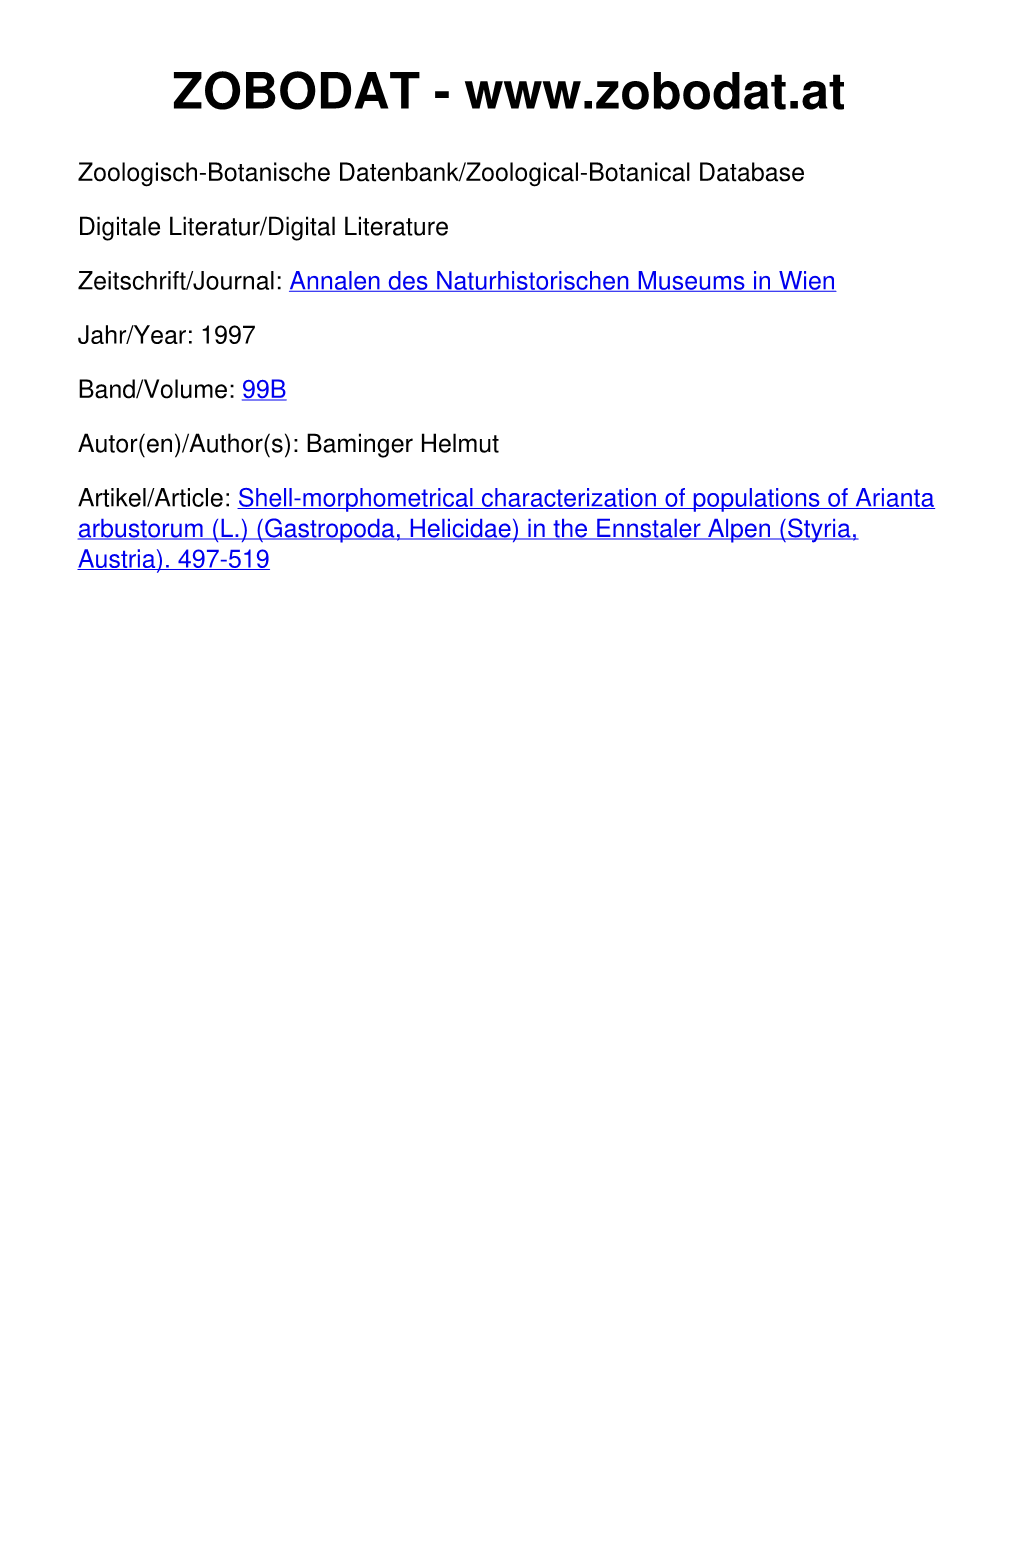 Shell-Morphometrical Characterization of Populations of Arianta Arbustorum (L.) (Gastropoda, Helicidae) in the Ennstaler Alpen (Styria, Austria)